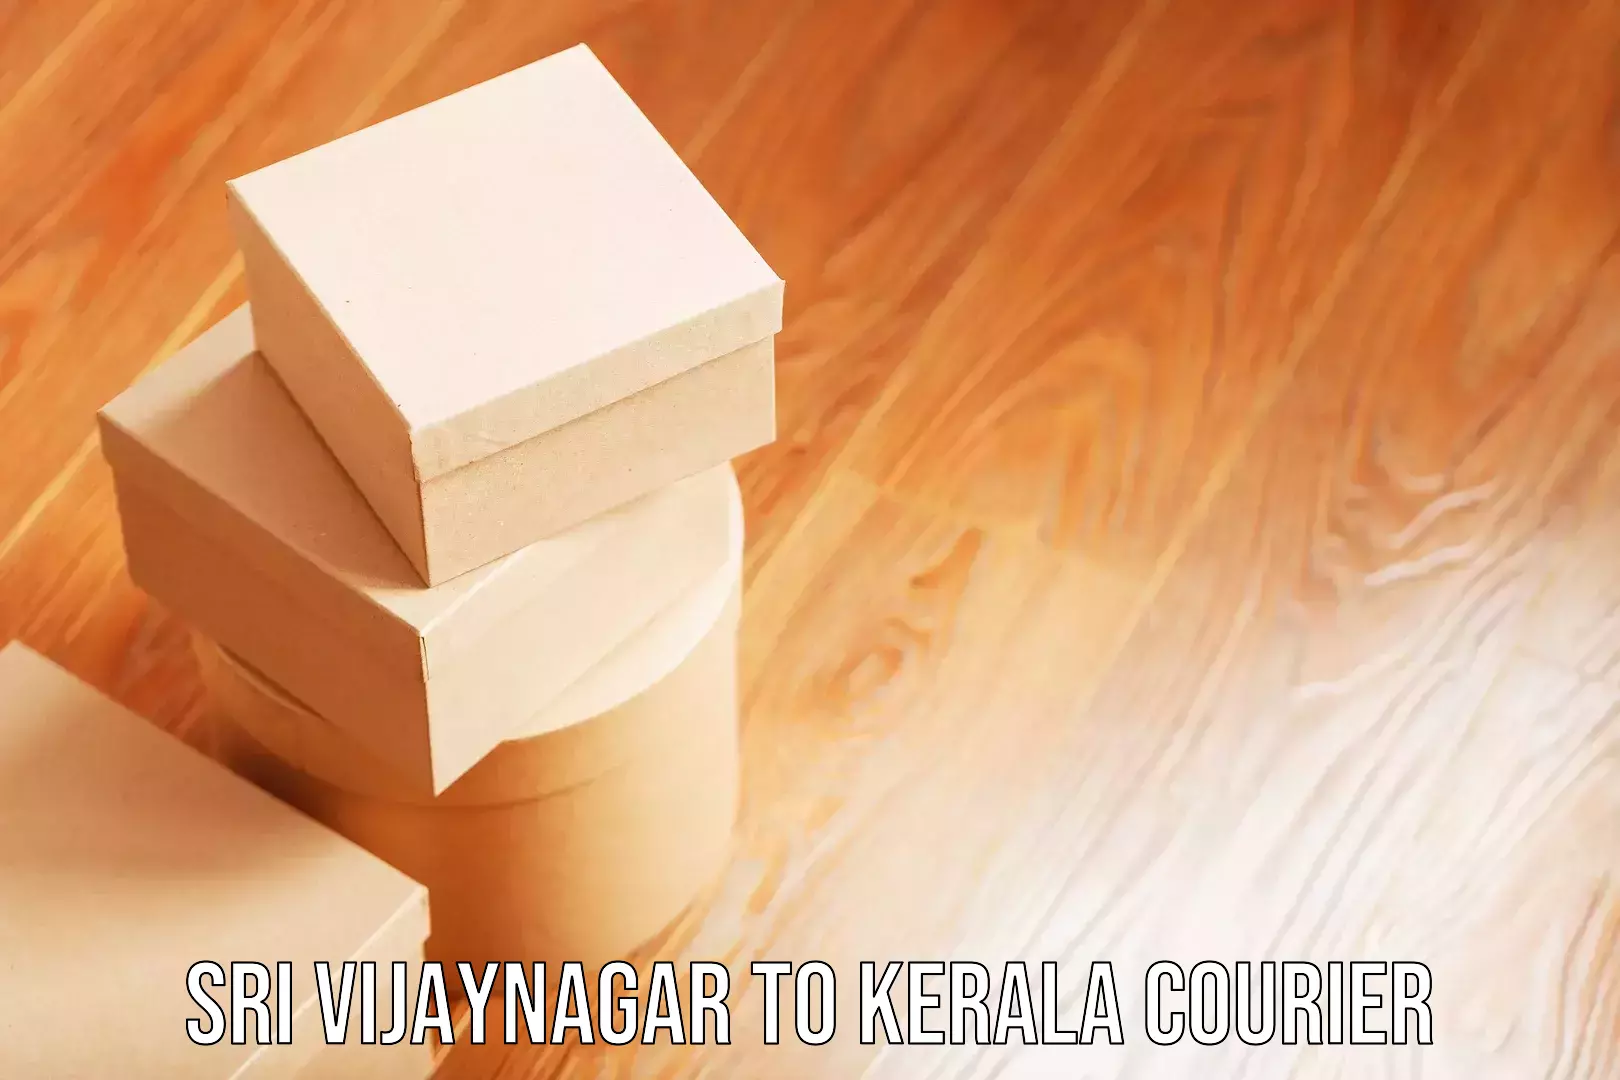 Luggage shipment specialists Sri Vijaynagar to Kallachi